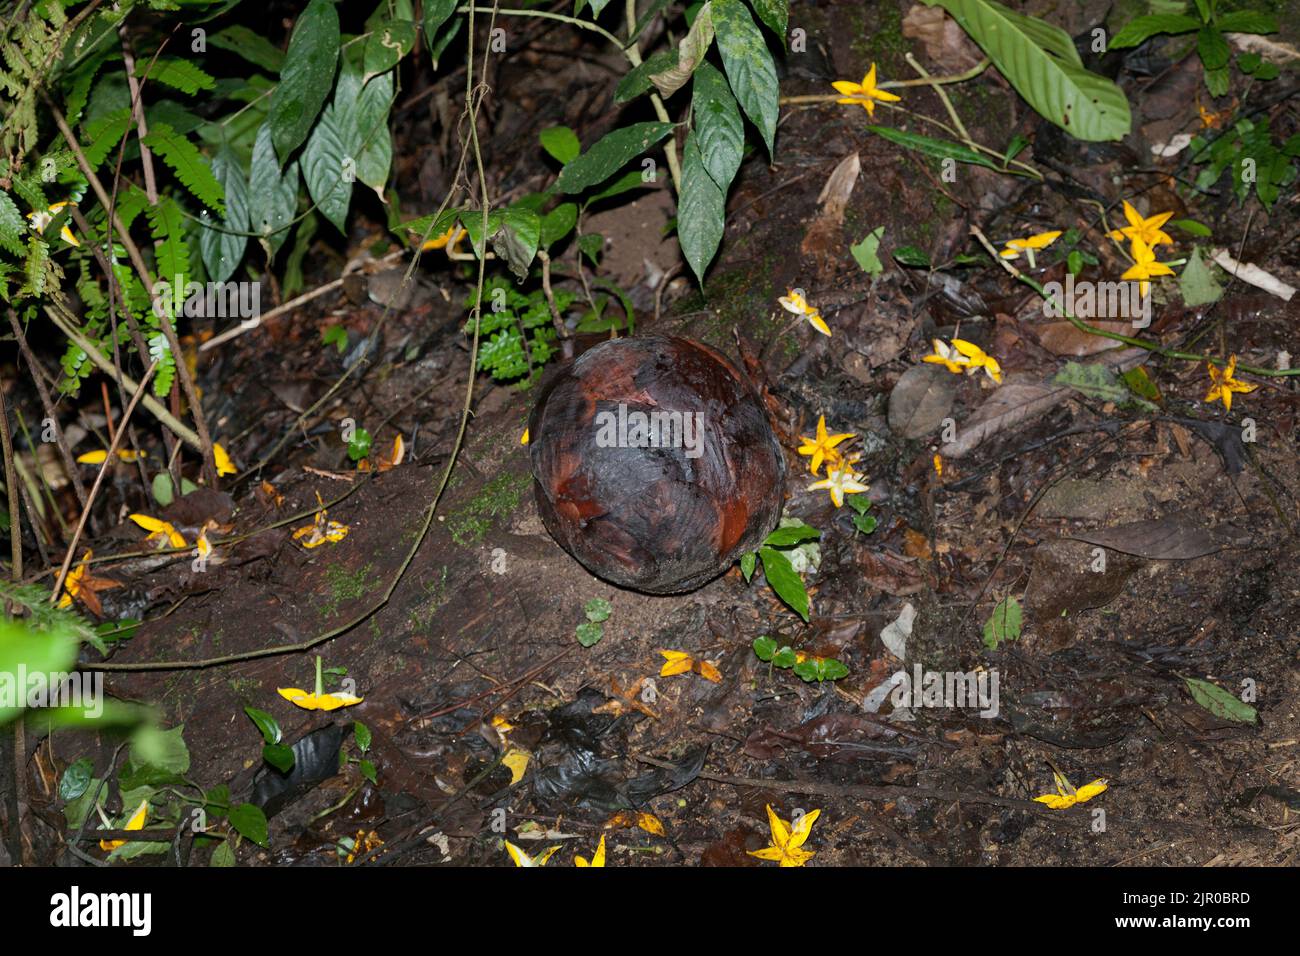 Rafflesia buds on forest floor, Rafflesia kerri, Cameron Highlands, Malaysia Stock Photo